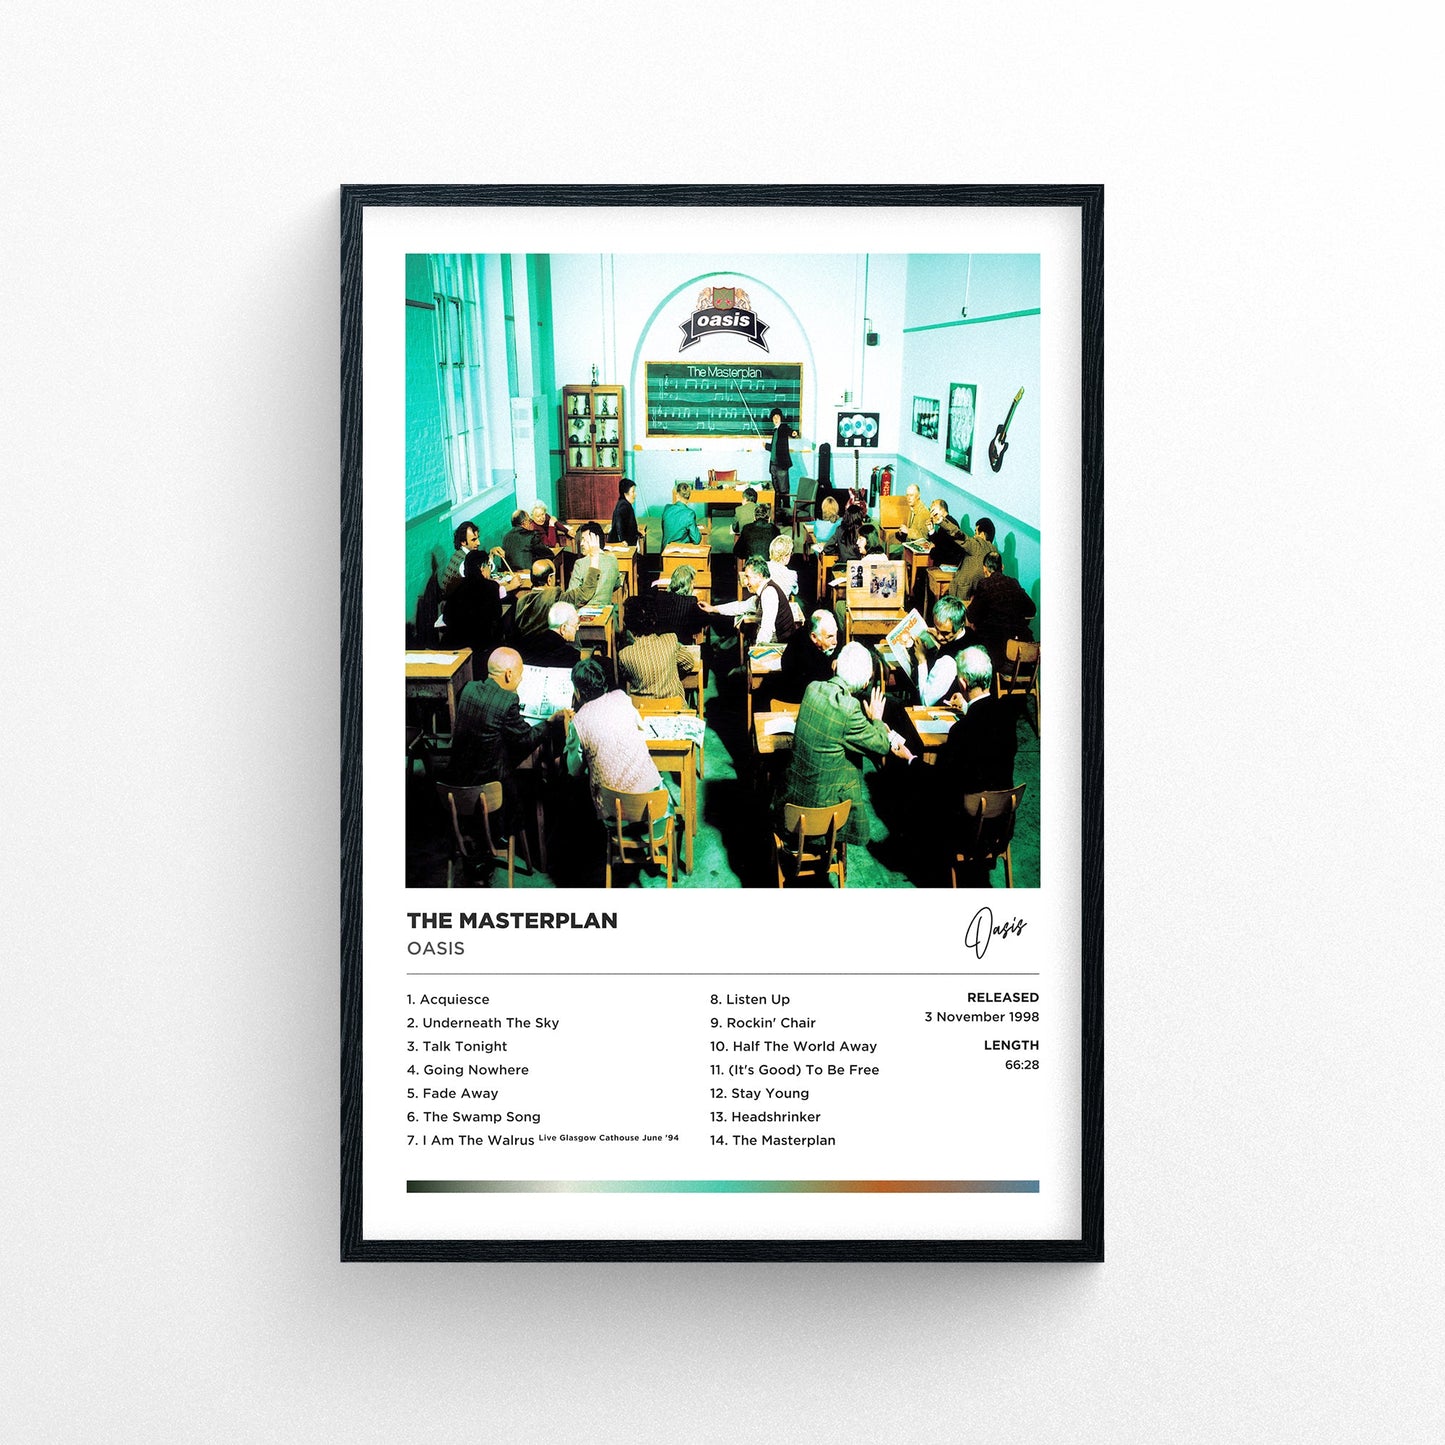 Oasis - The Masterplan Framed Poster Print | Polaroid Style | Album Cover Artwork